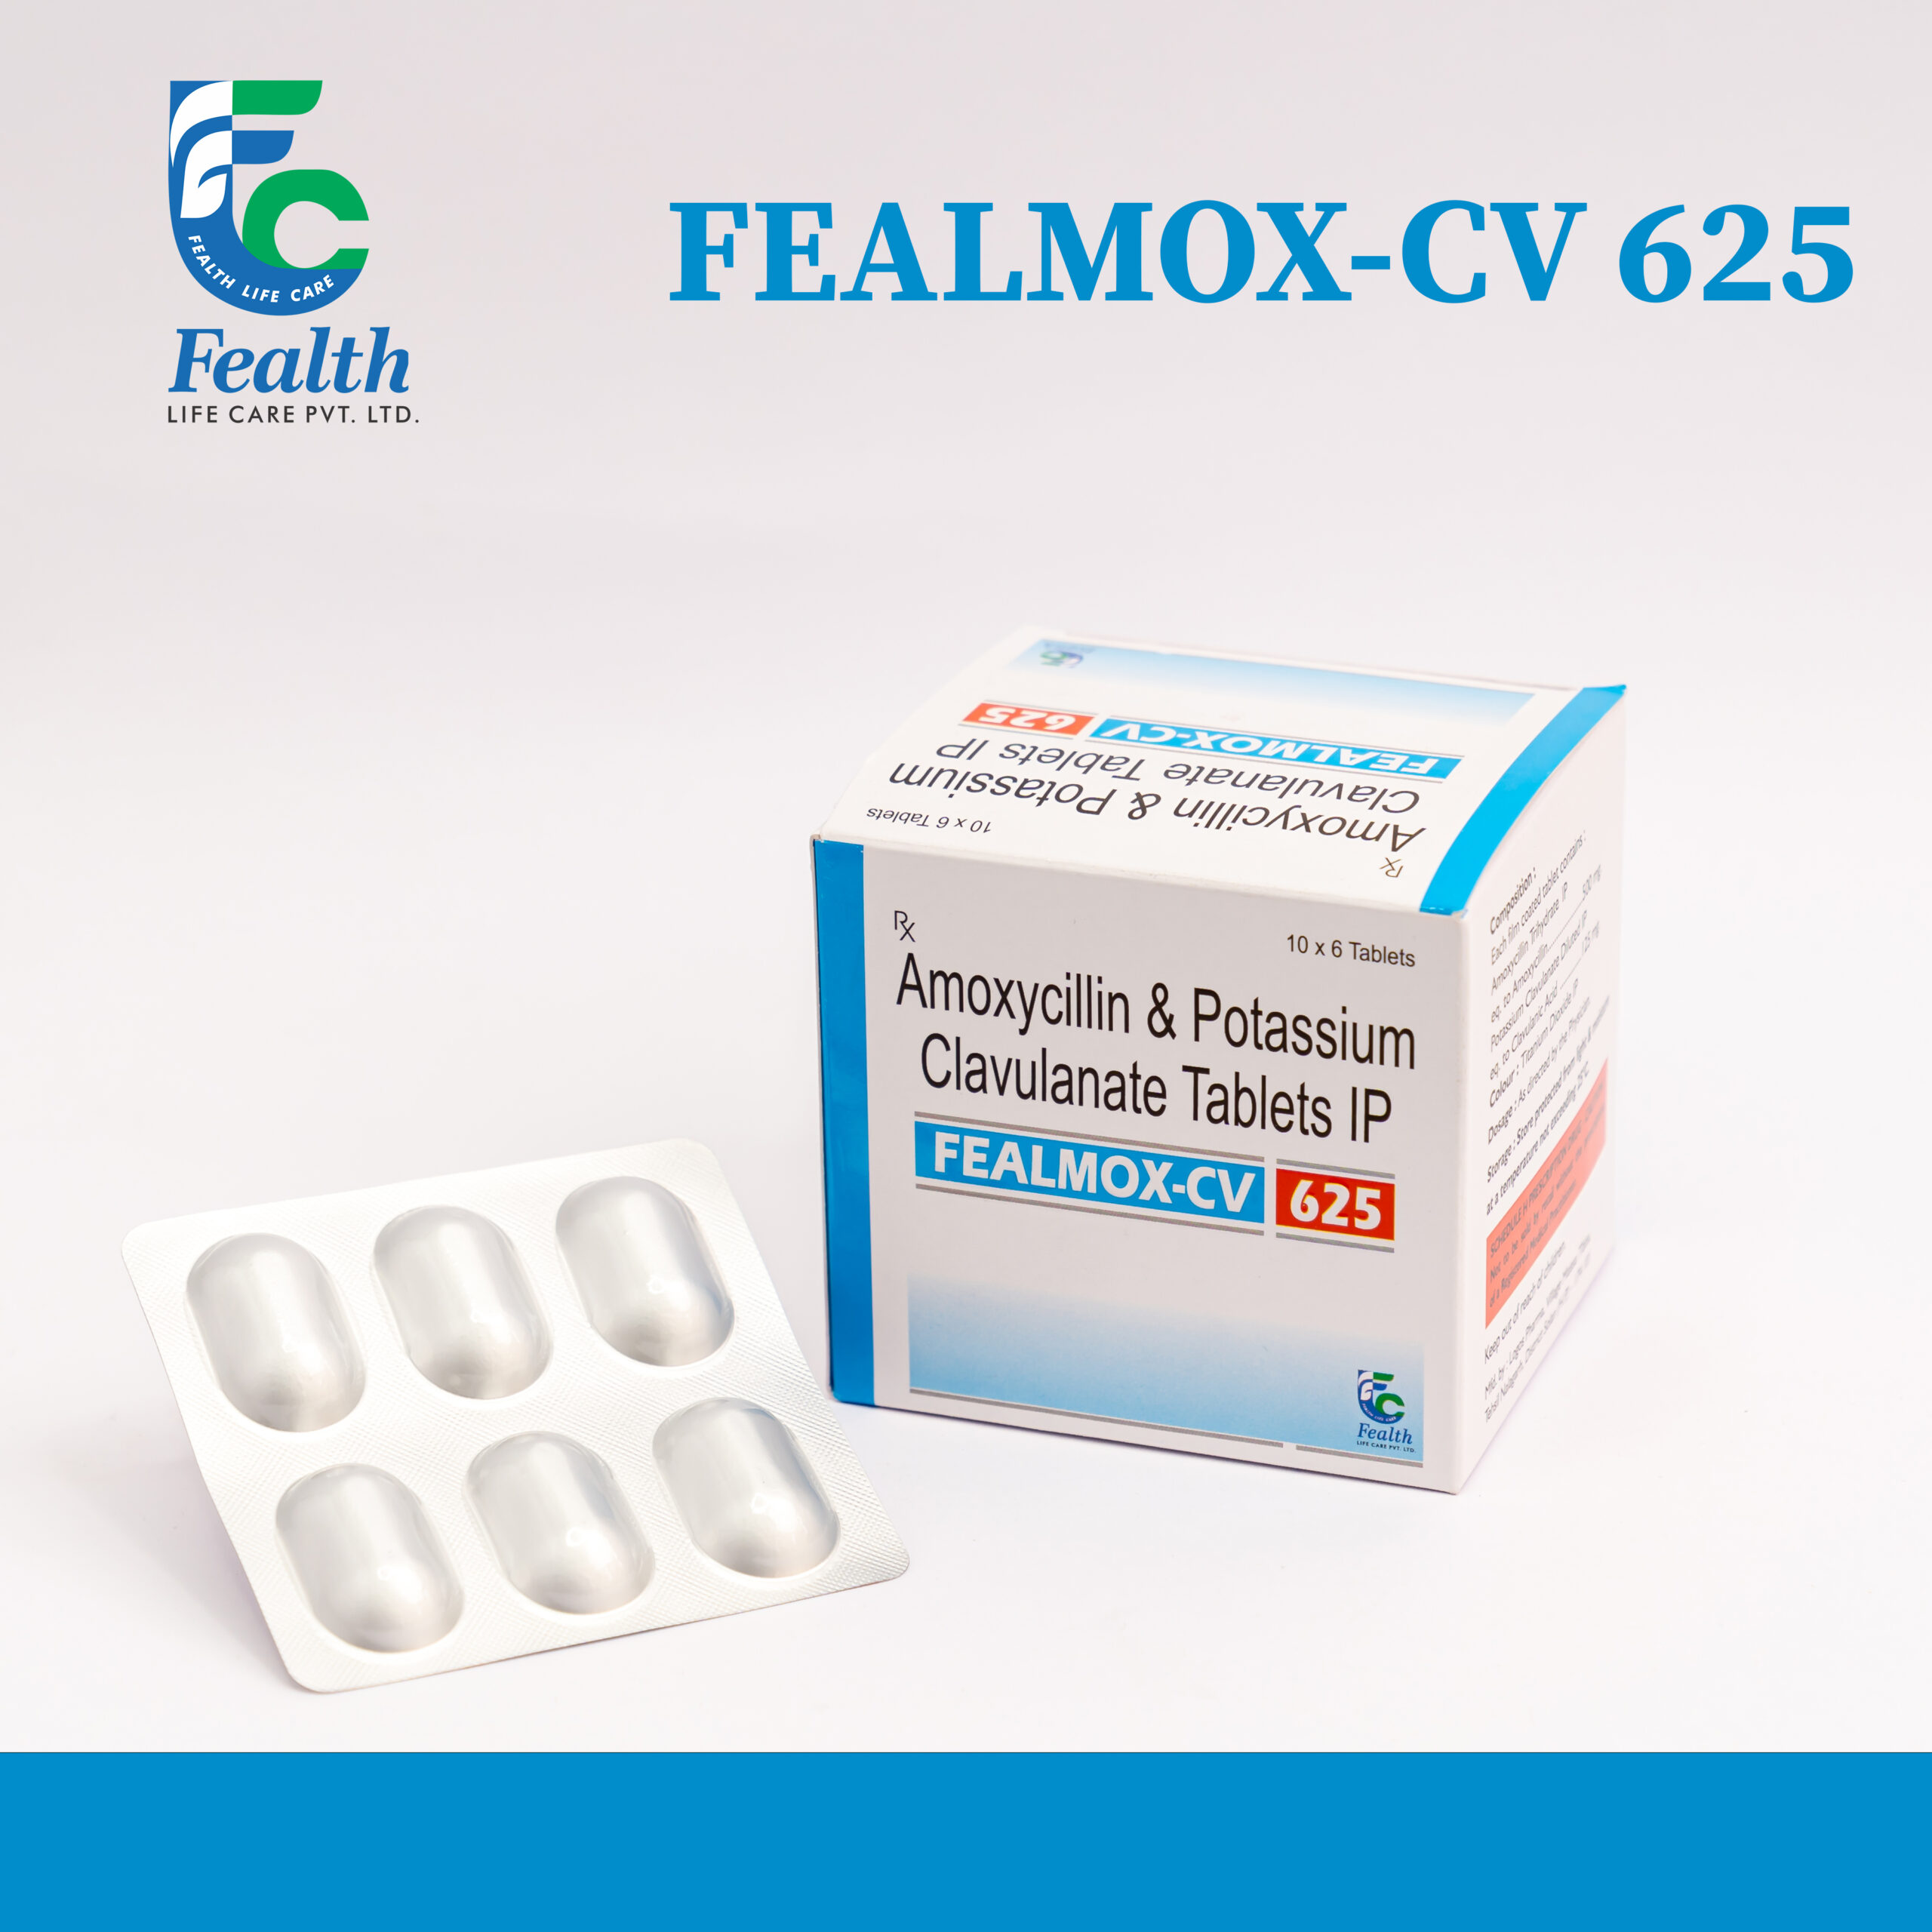 FEALMOX-CV 625